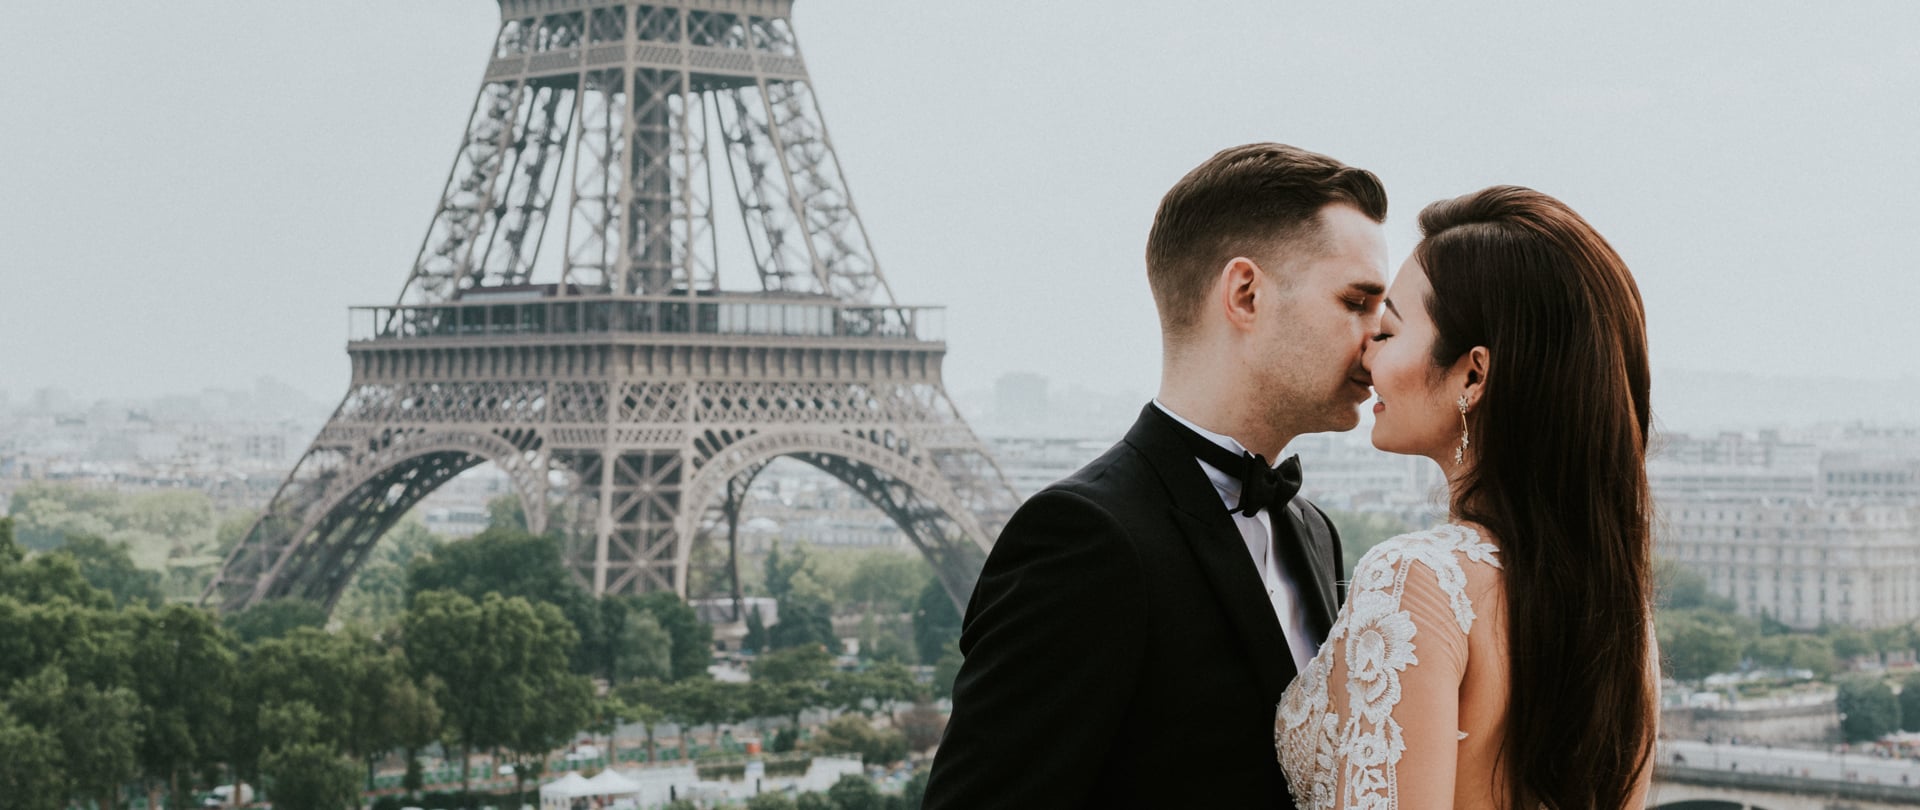 Germaine & Sam Wedding Video Filmed at Paris, France